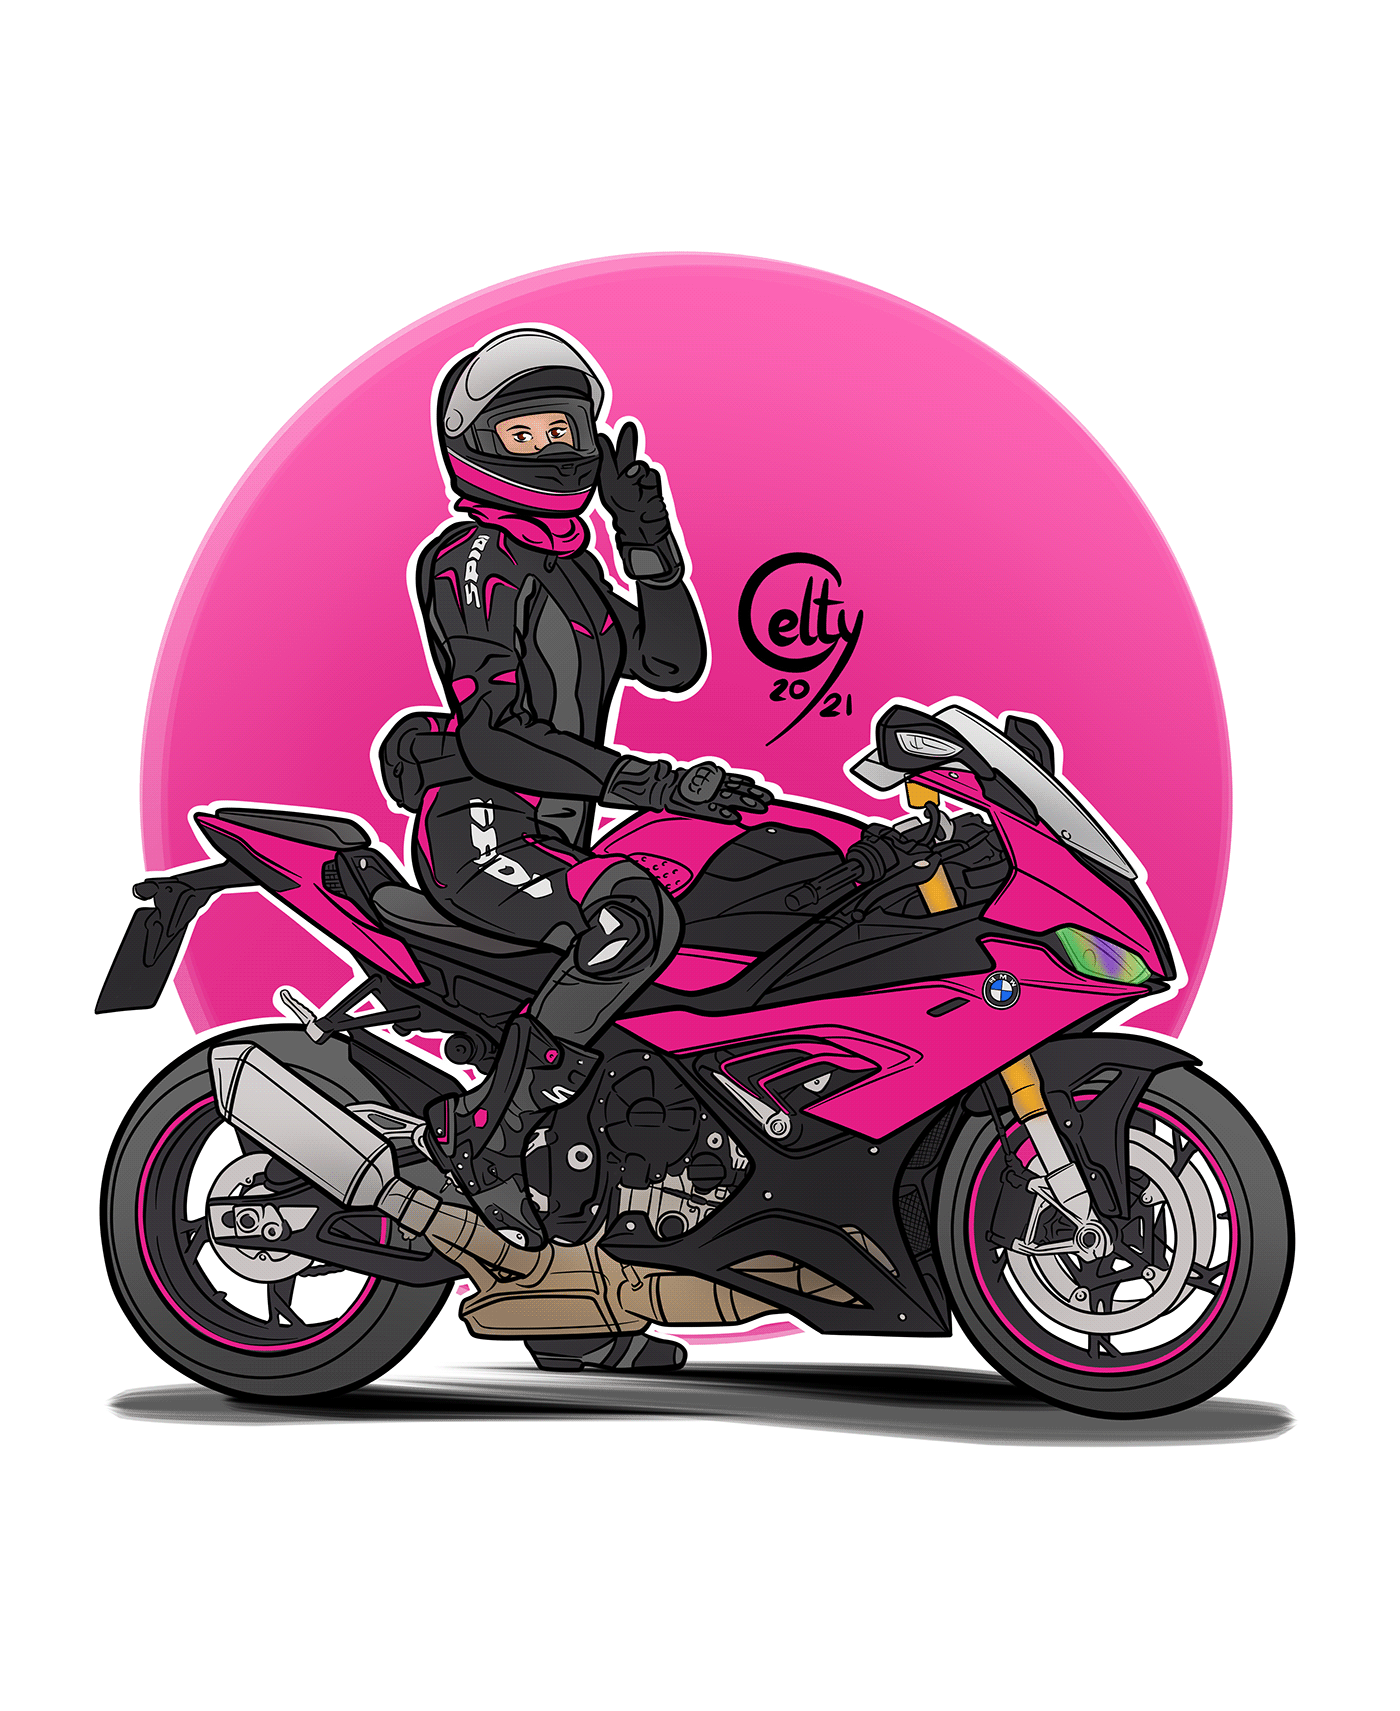 Bike BMW girl motorbike motorcycle pink Racing S1000 S1000RR woman